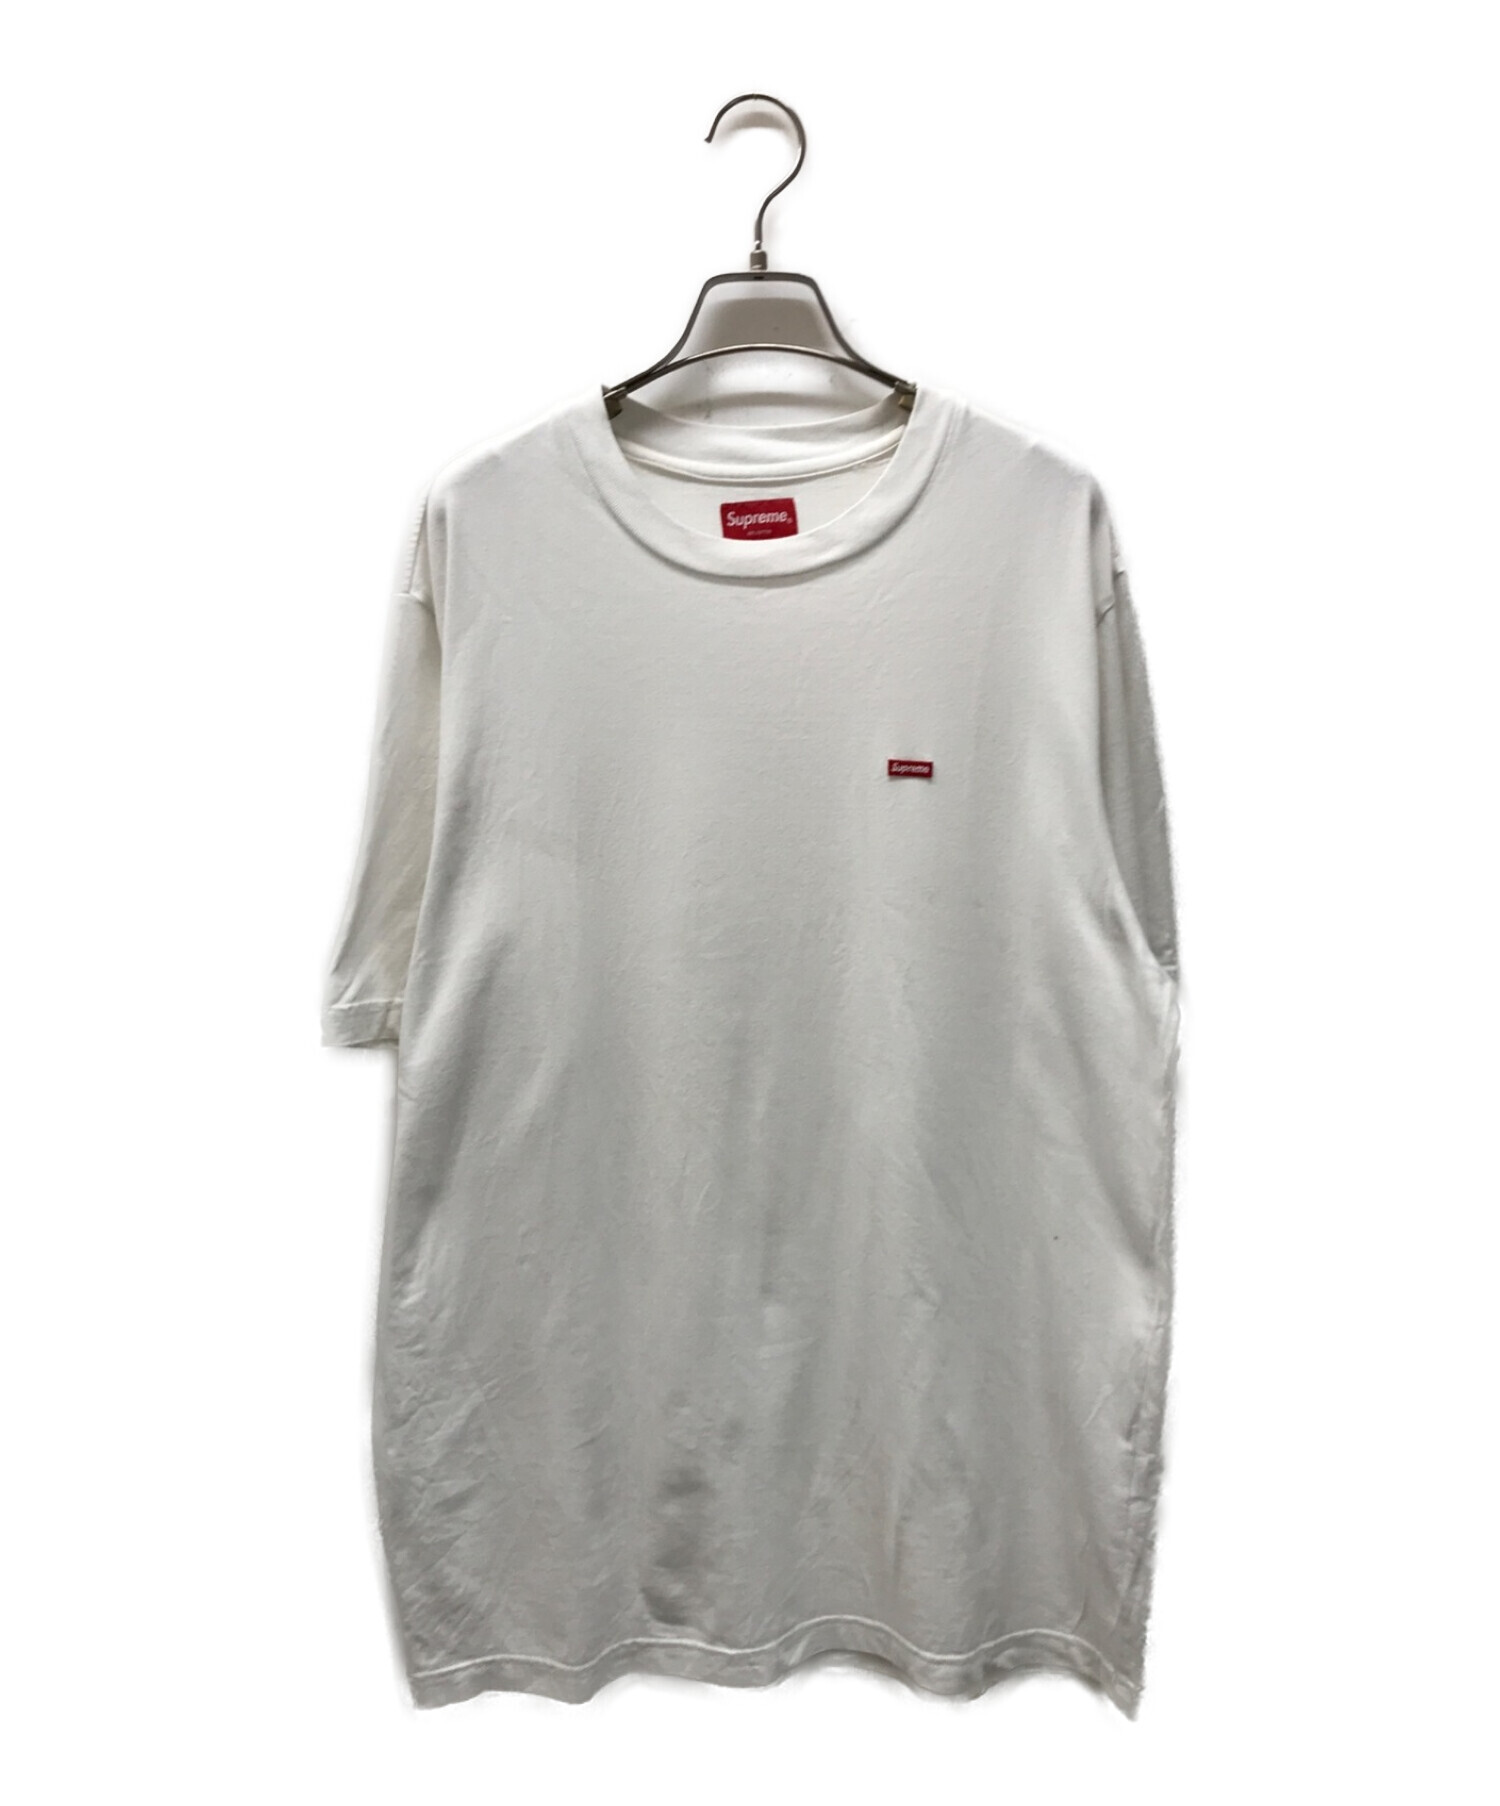 Supreme (シュプリーム) スモールボックスロゴTシャツ ホワイト×レッド サイズ:M